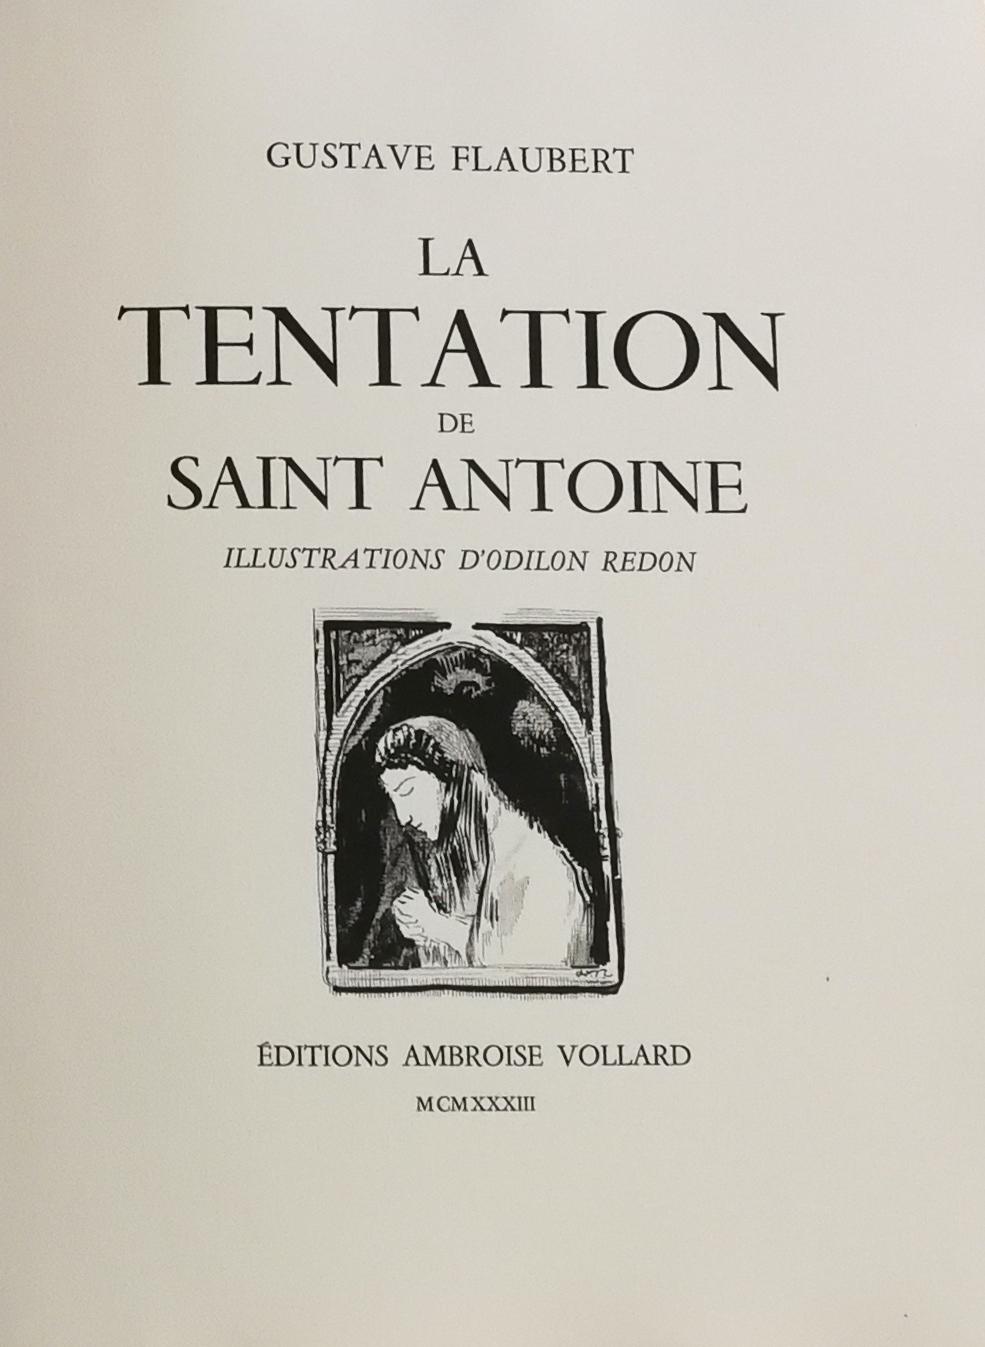 La Tentation de Saint Antoine, Gustave Flaubert's illustrated book by O. Redon